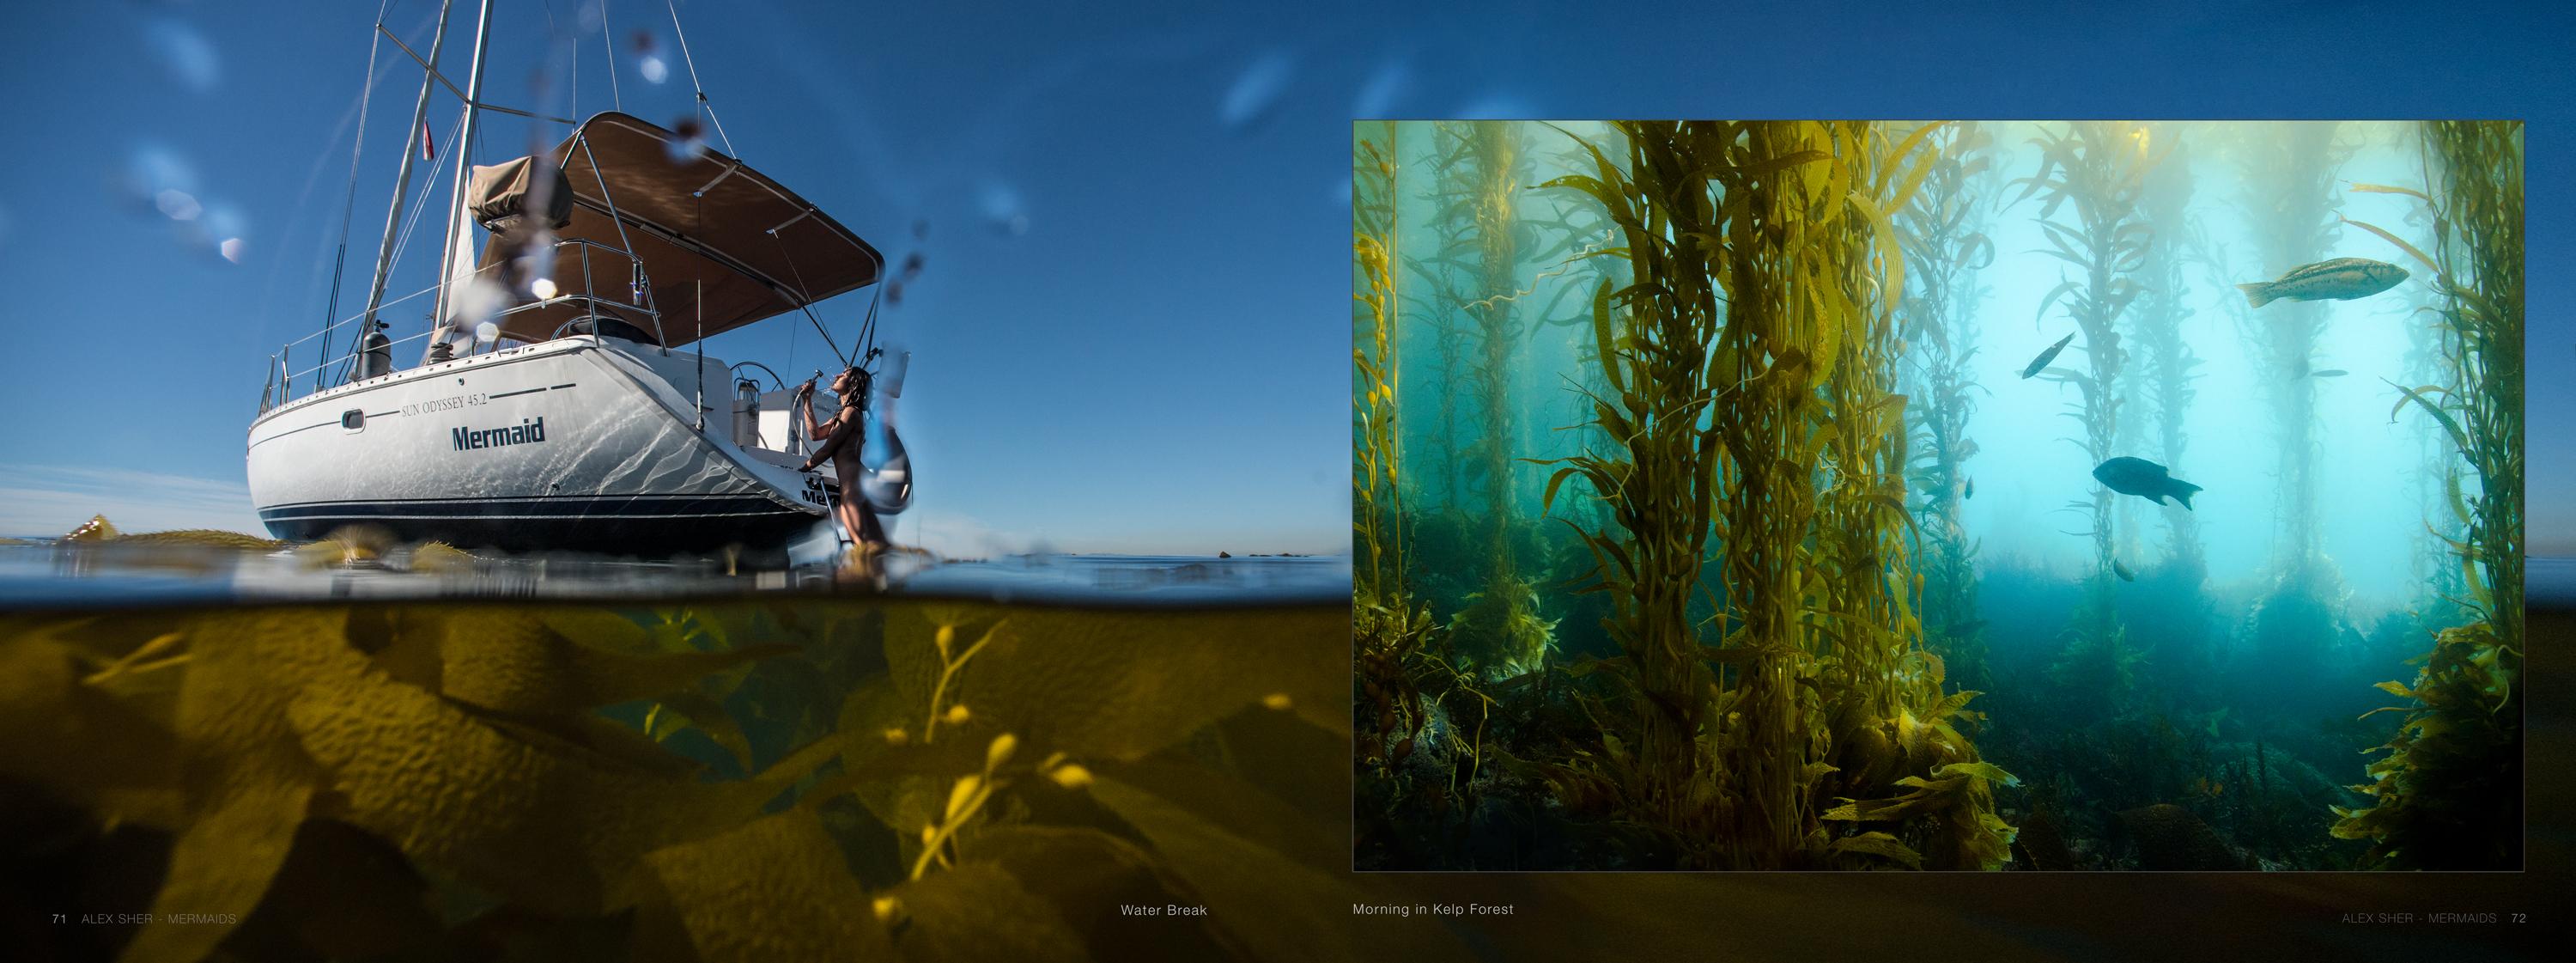 Mermaids -  a book of underwater nude and ocean wildlife photographs 14